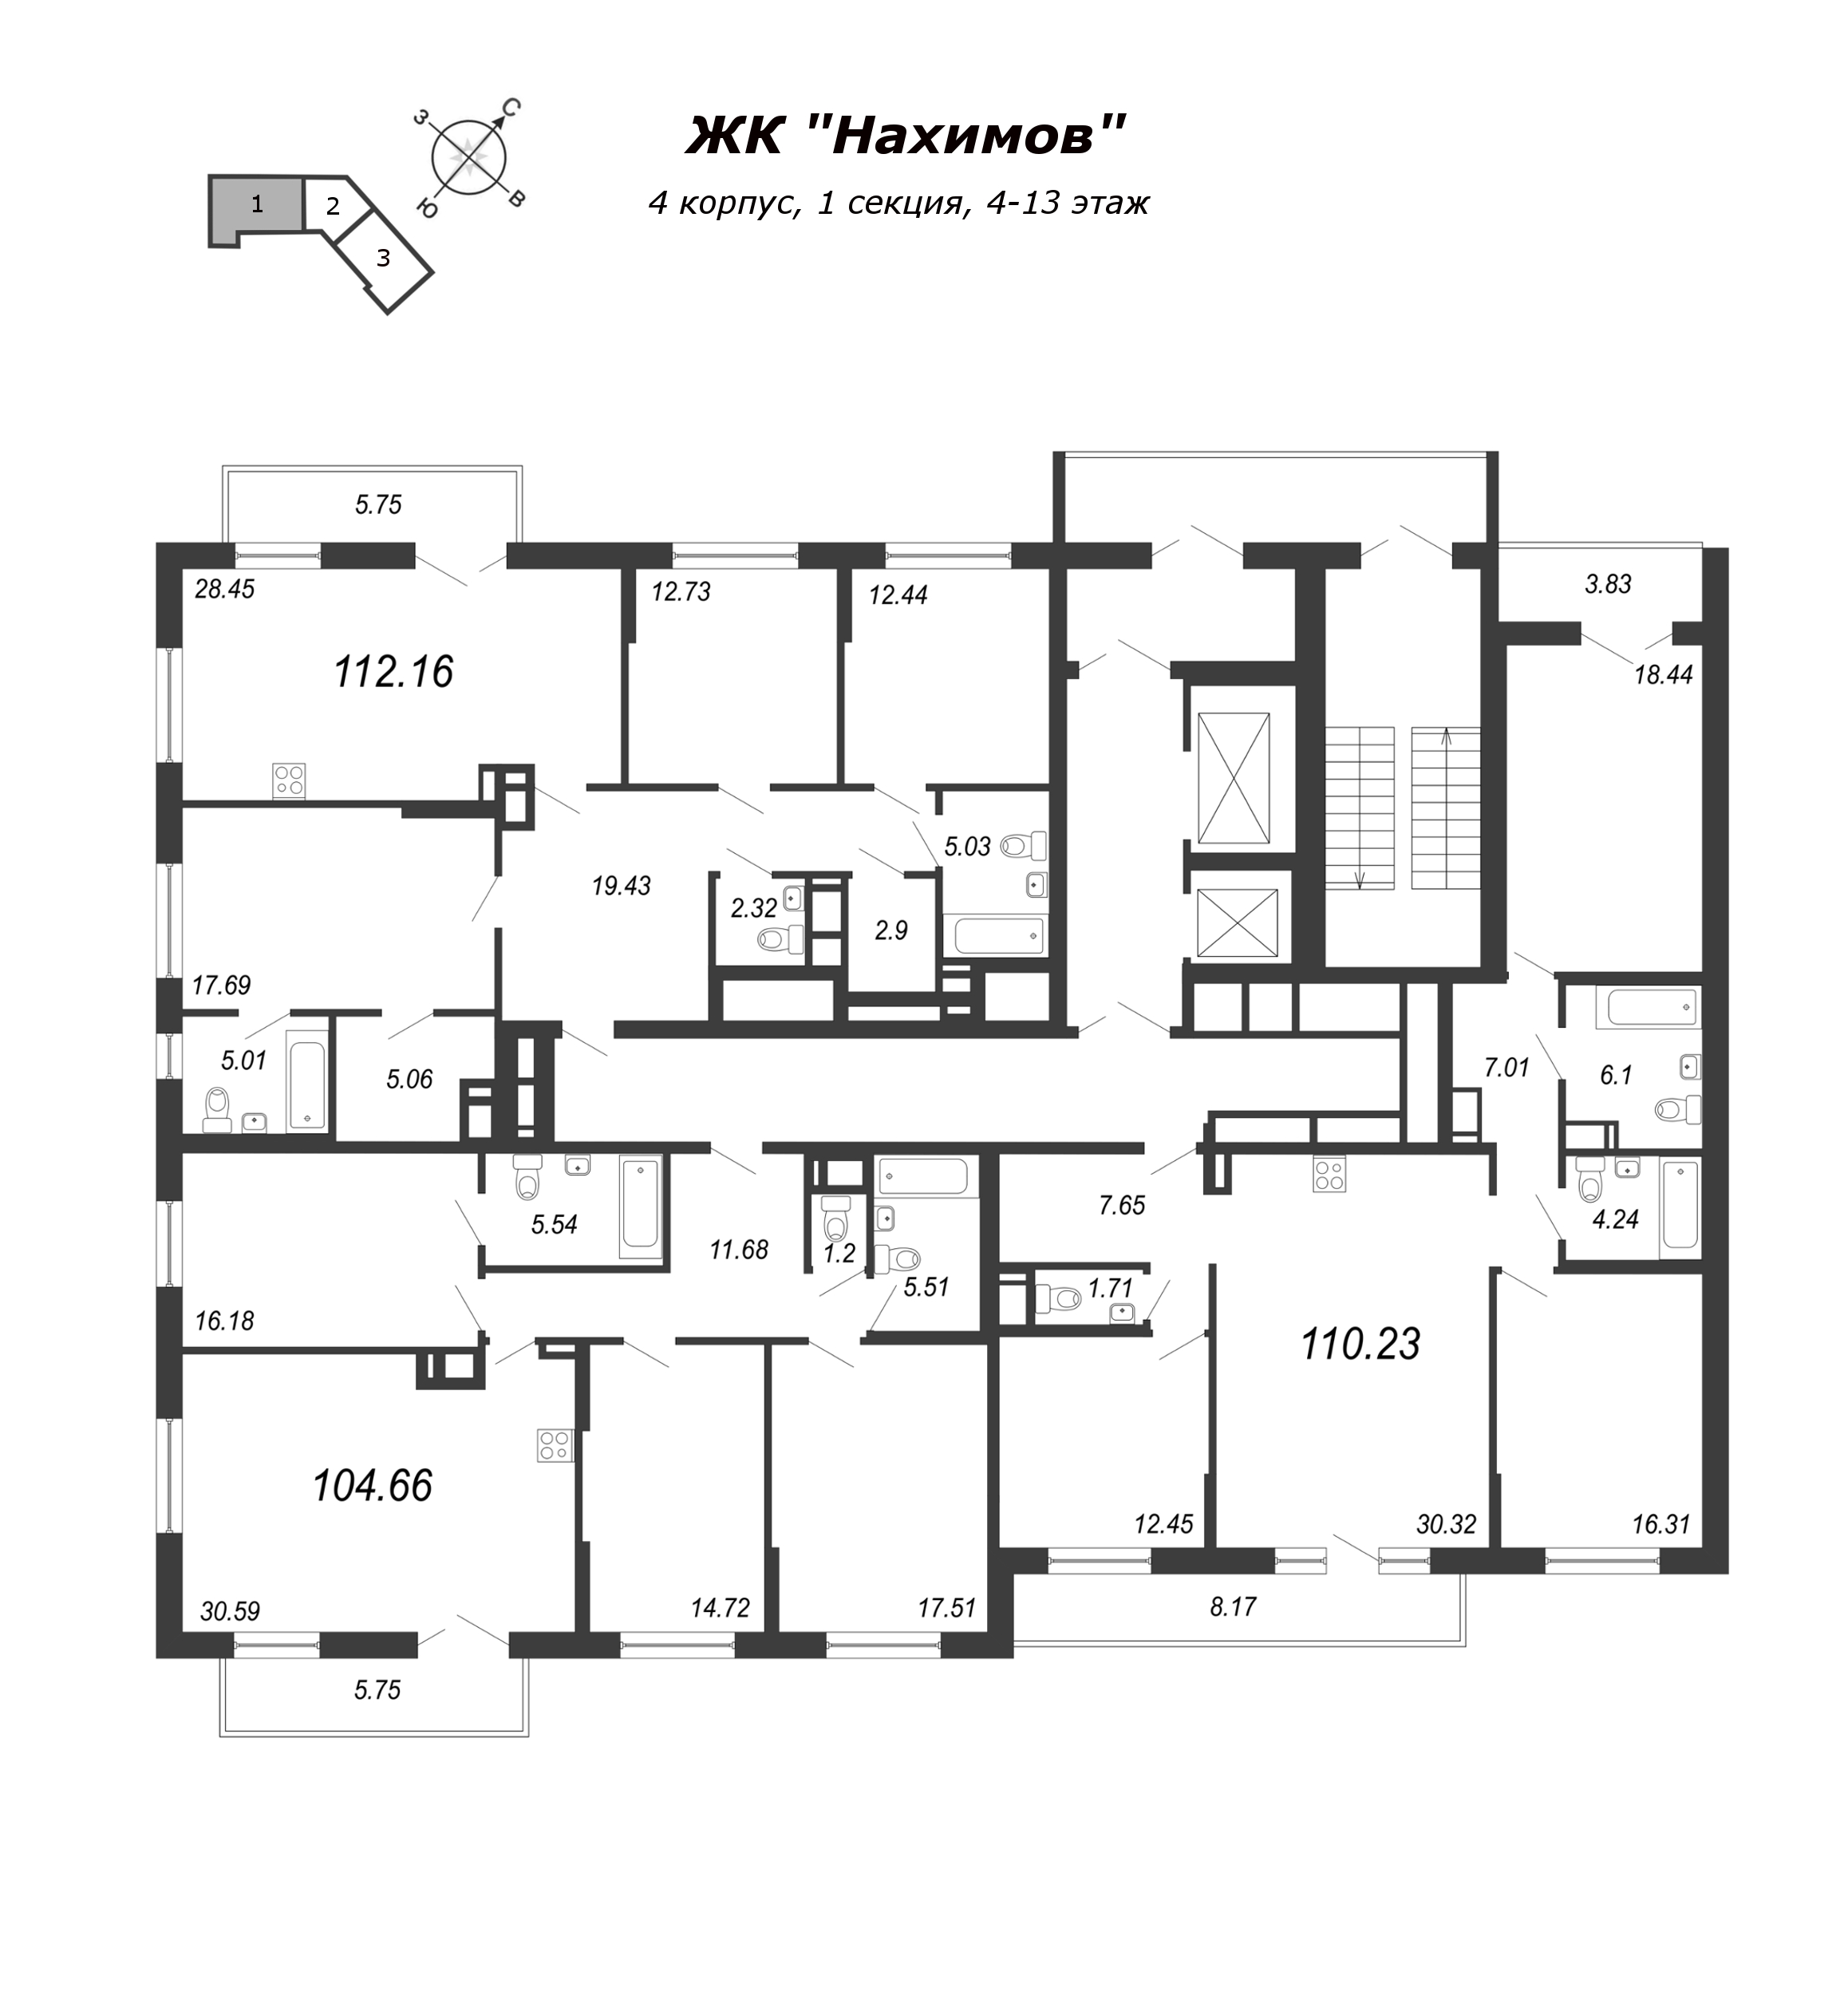 4-комнатная (Евро) квартира, 112.6 м² - планировка этажа